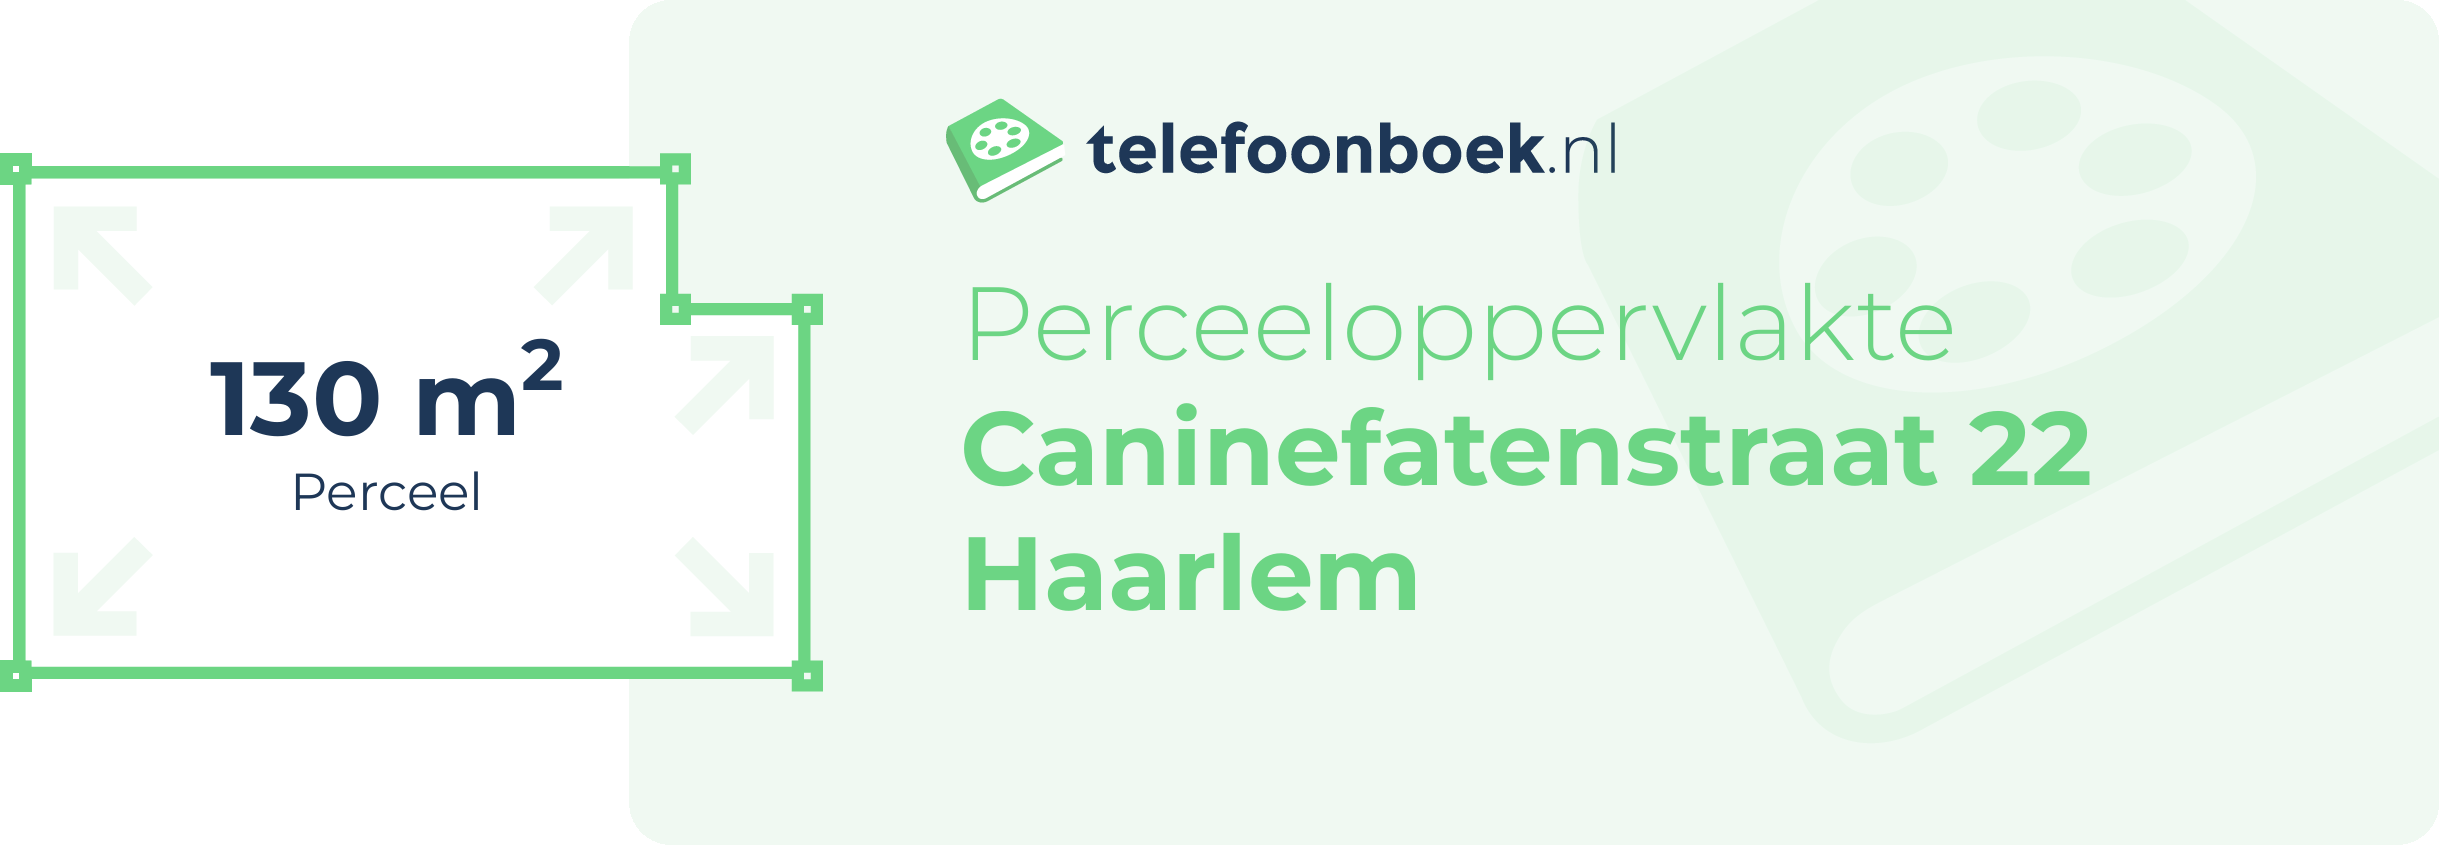 Perceeloppervlakte Caninefatenstraat 22 Haarlem